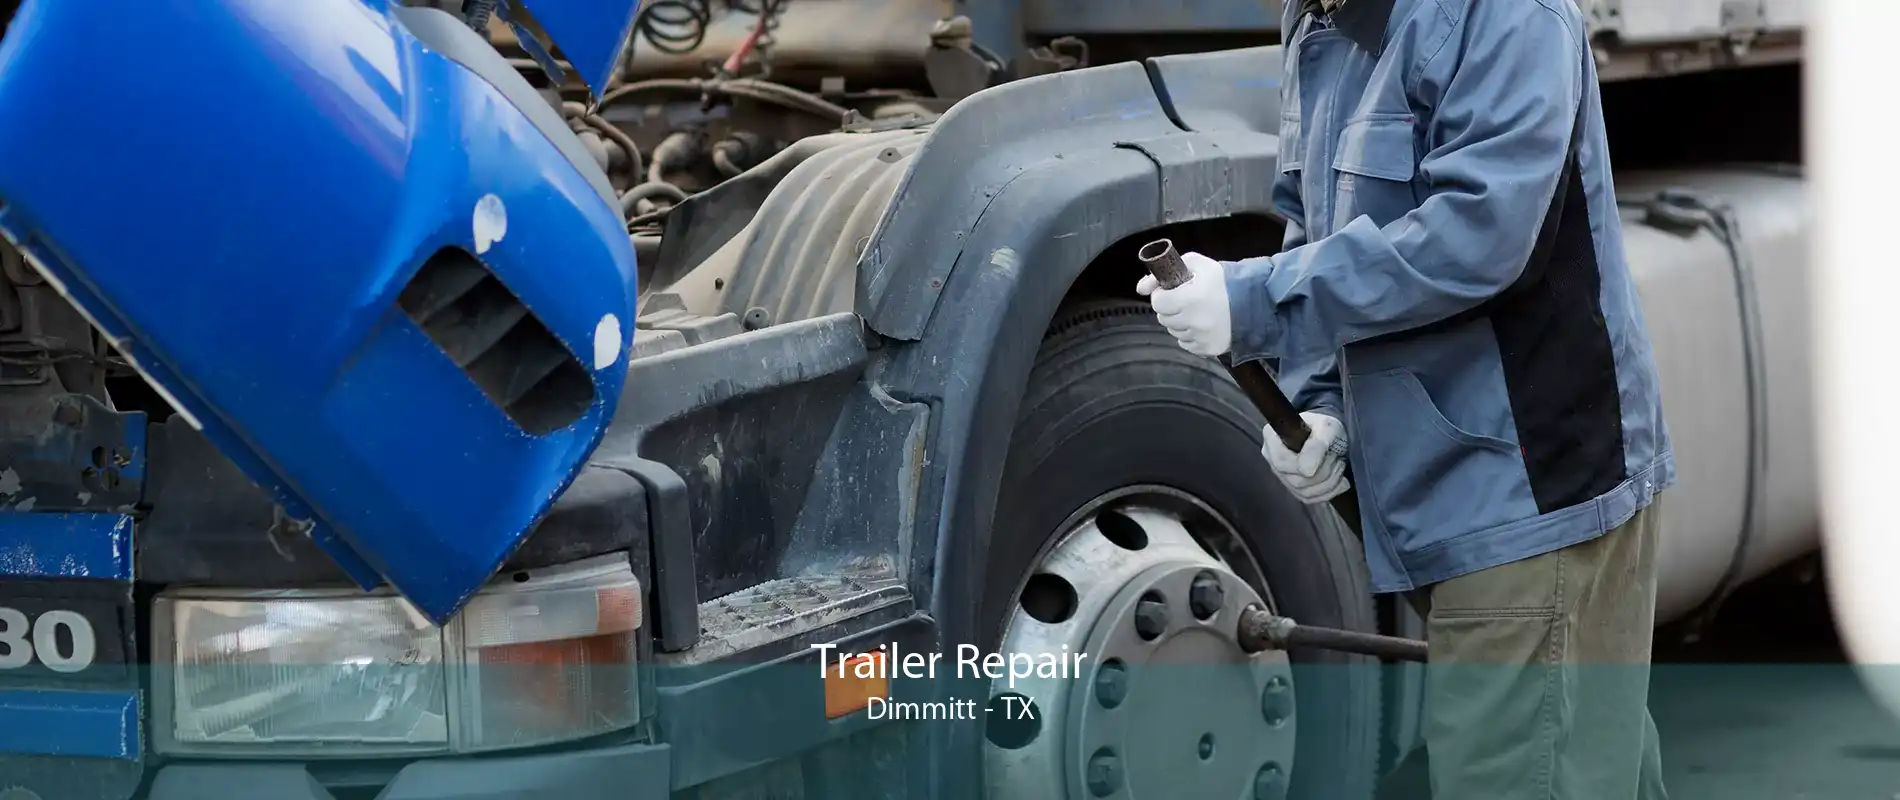 Trailer Repair Dimmitt - TX